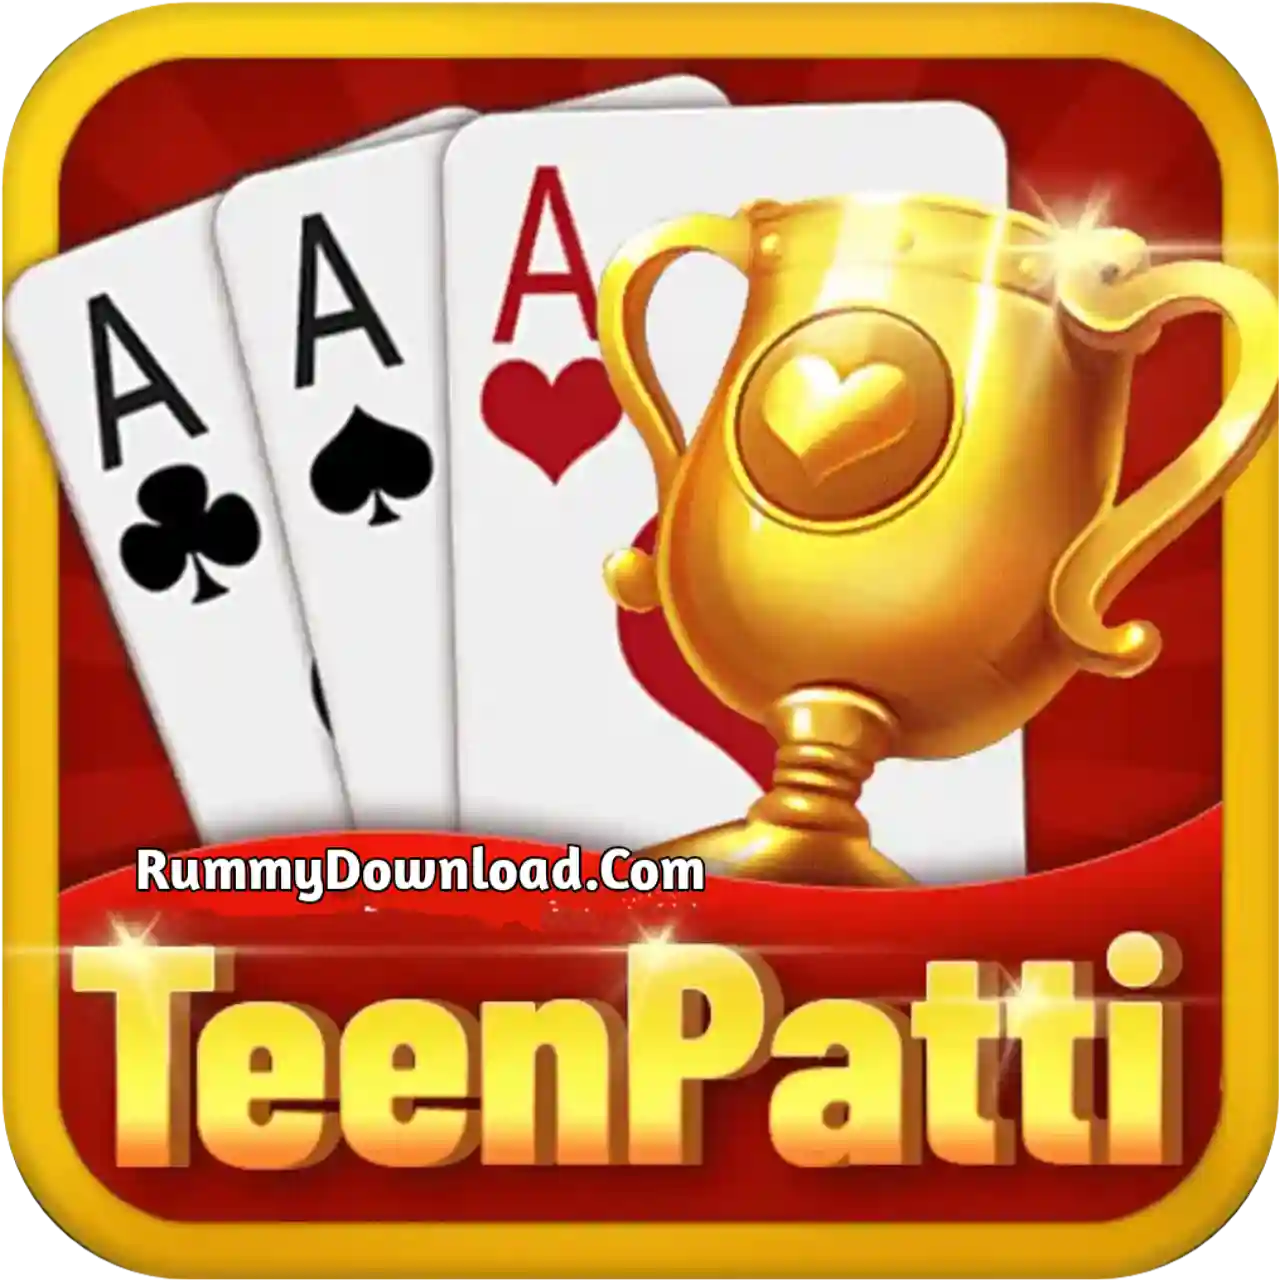 Teen Patti Master - Teen Patti VIP